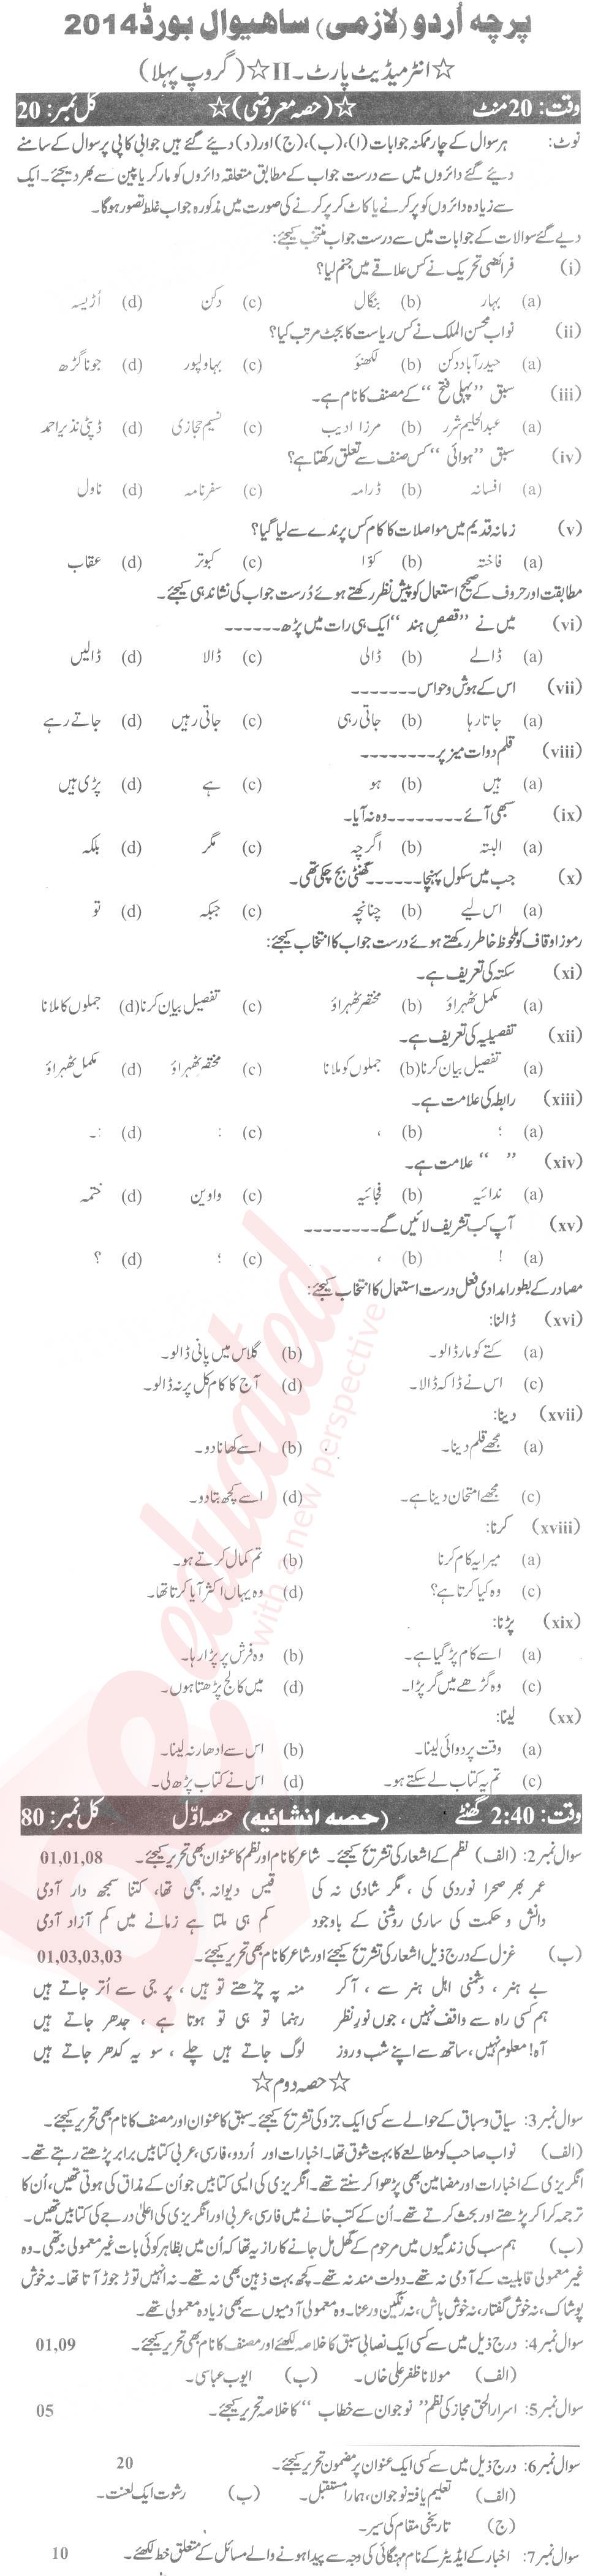 Urdu 12th class Past Paper Group 1 BISE Sahiwal 2014